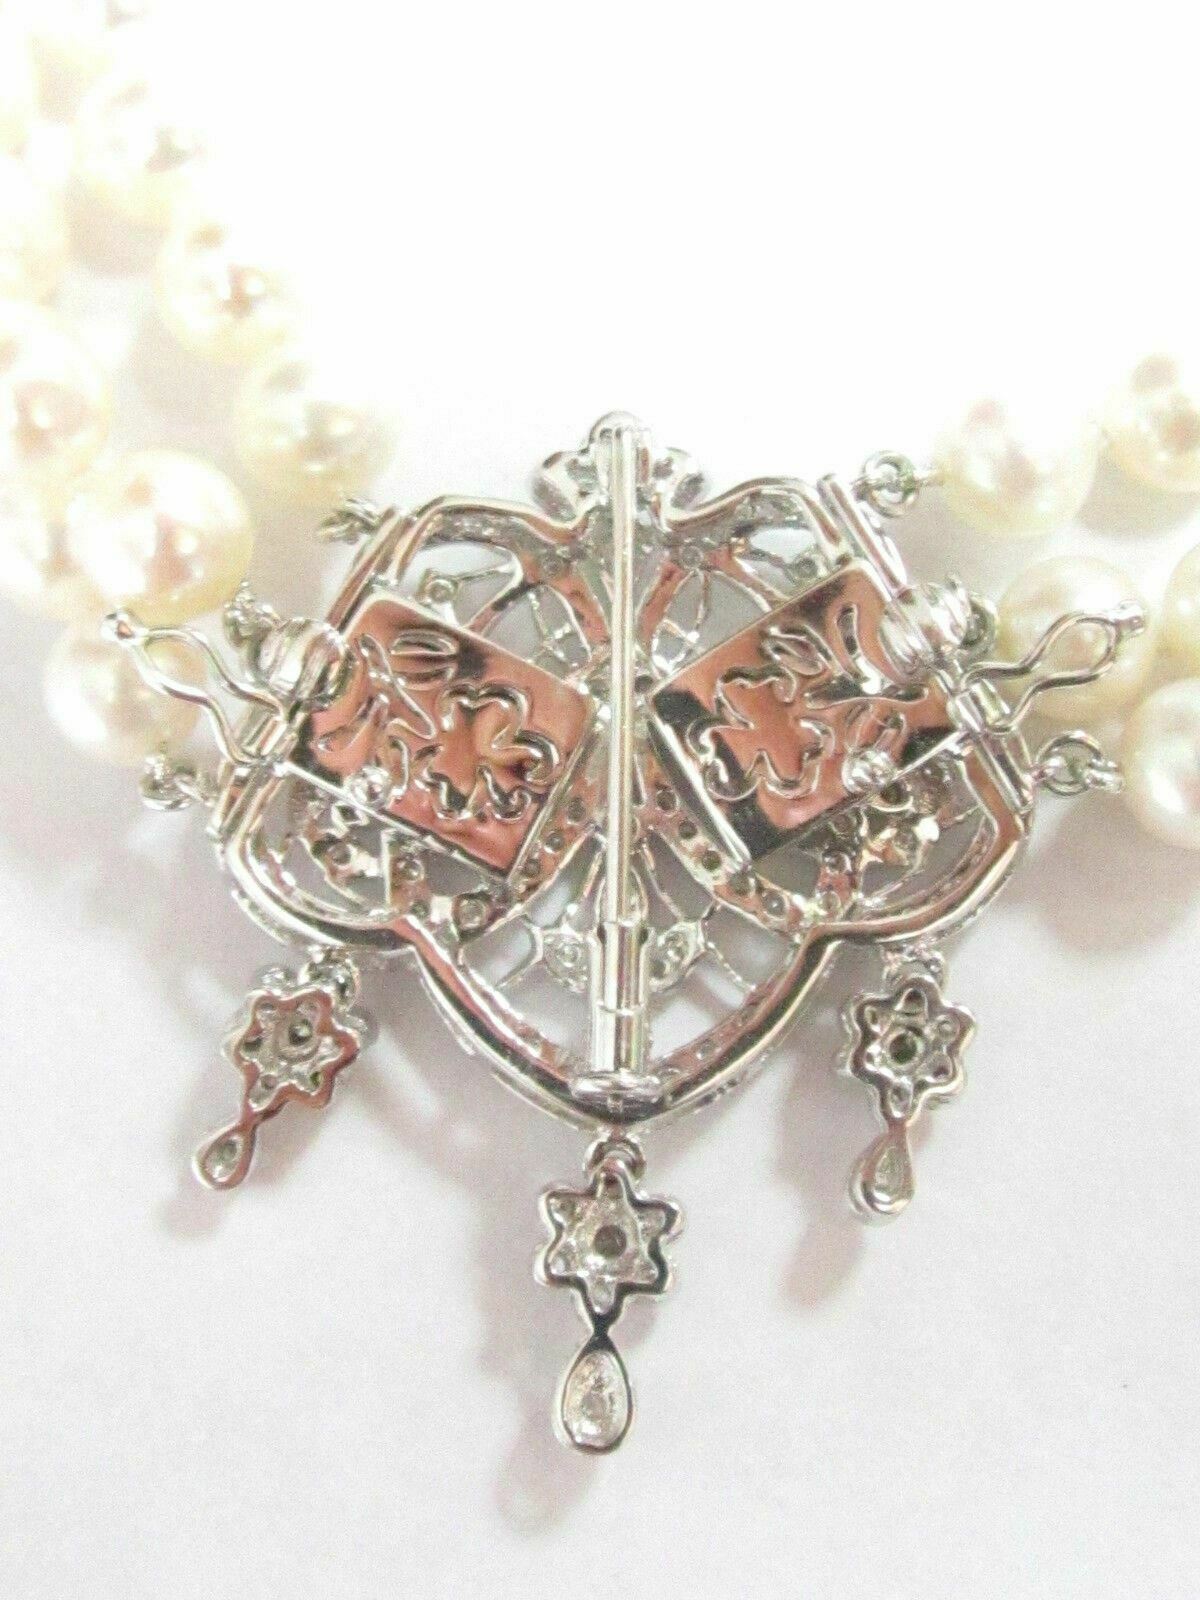 Pearls & Diamonds Detachable Pendant/Brooch Strand/String Necklace 18k 17.5"